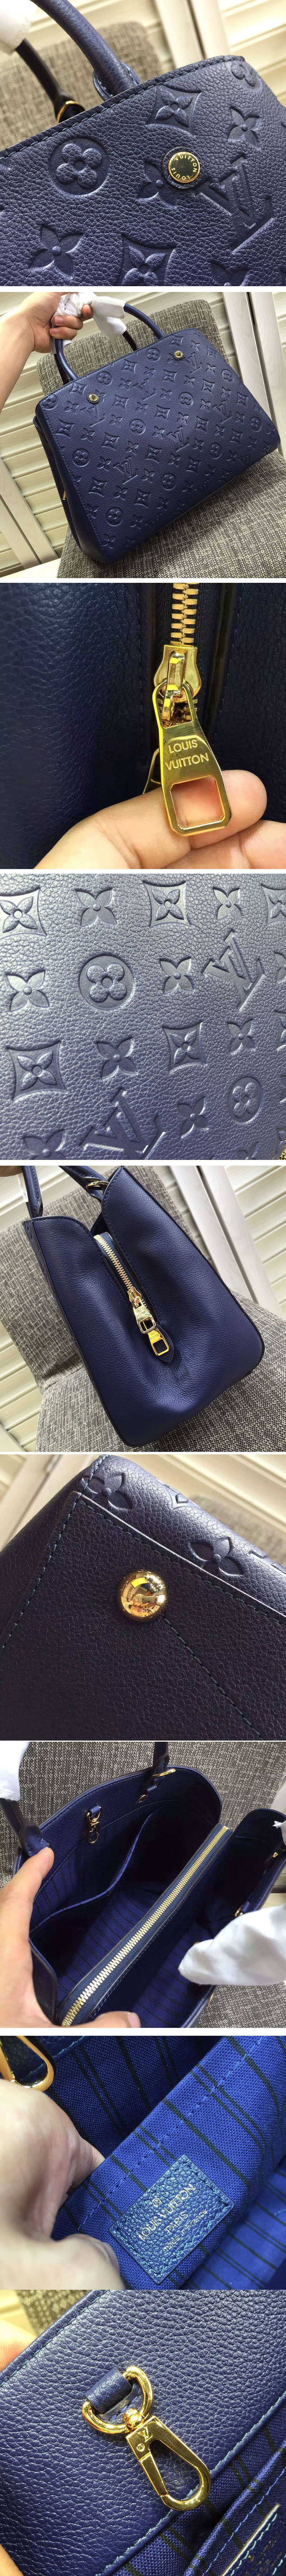 Louis Vuitton M41643 LV Christopher Messenger Bag in Monogram Macassar  Canvas Replica sale online ,buy fake bag